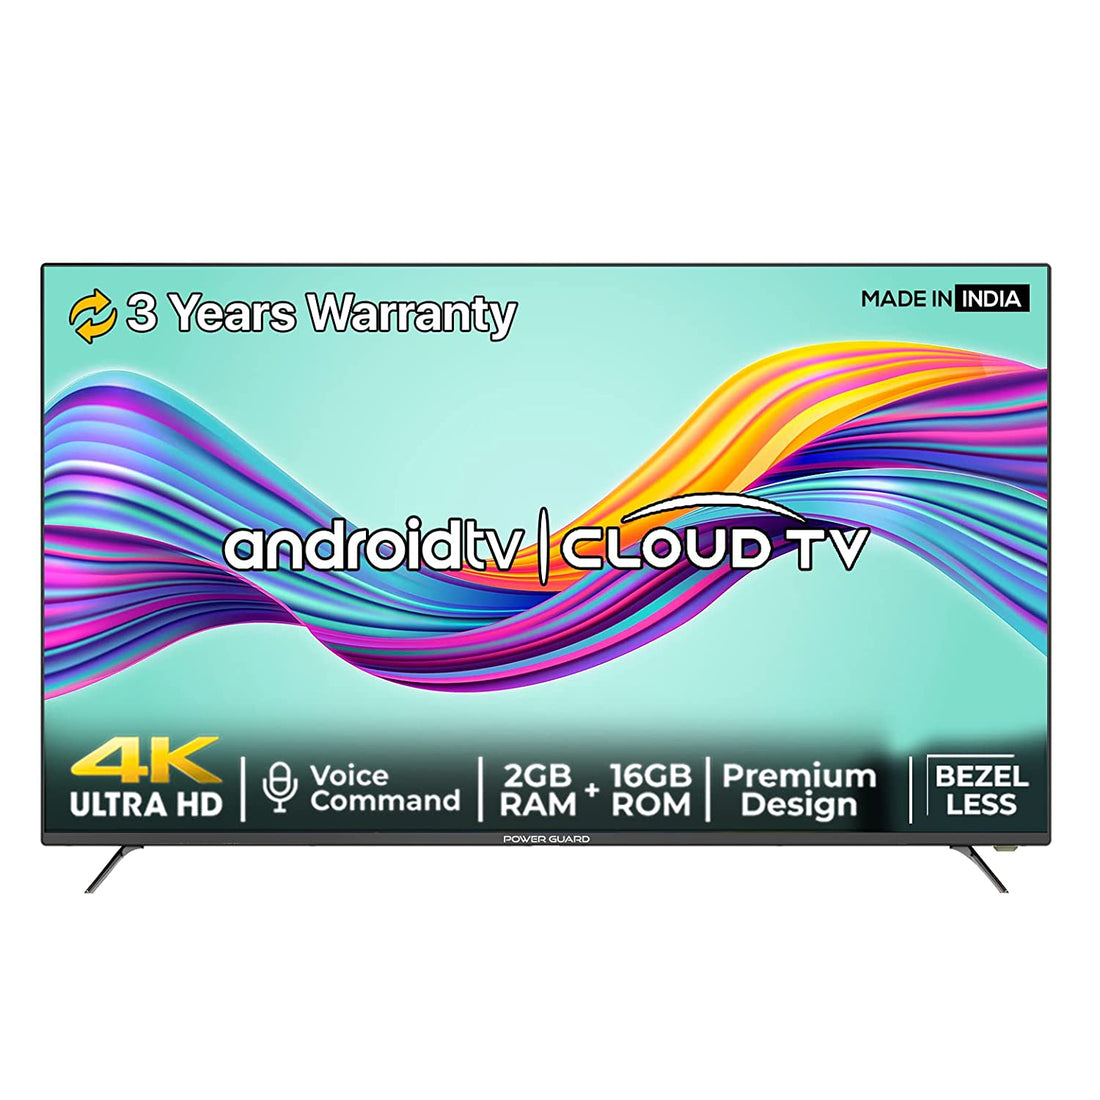 Get the Best Deals on Amazon 65 Inch 4K TV - Shop Now!